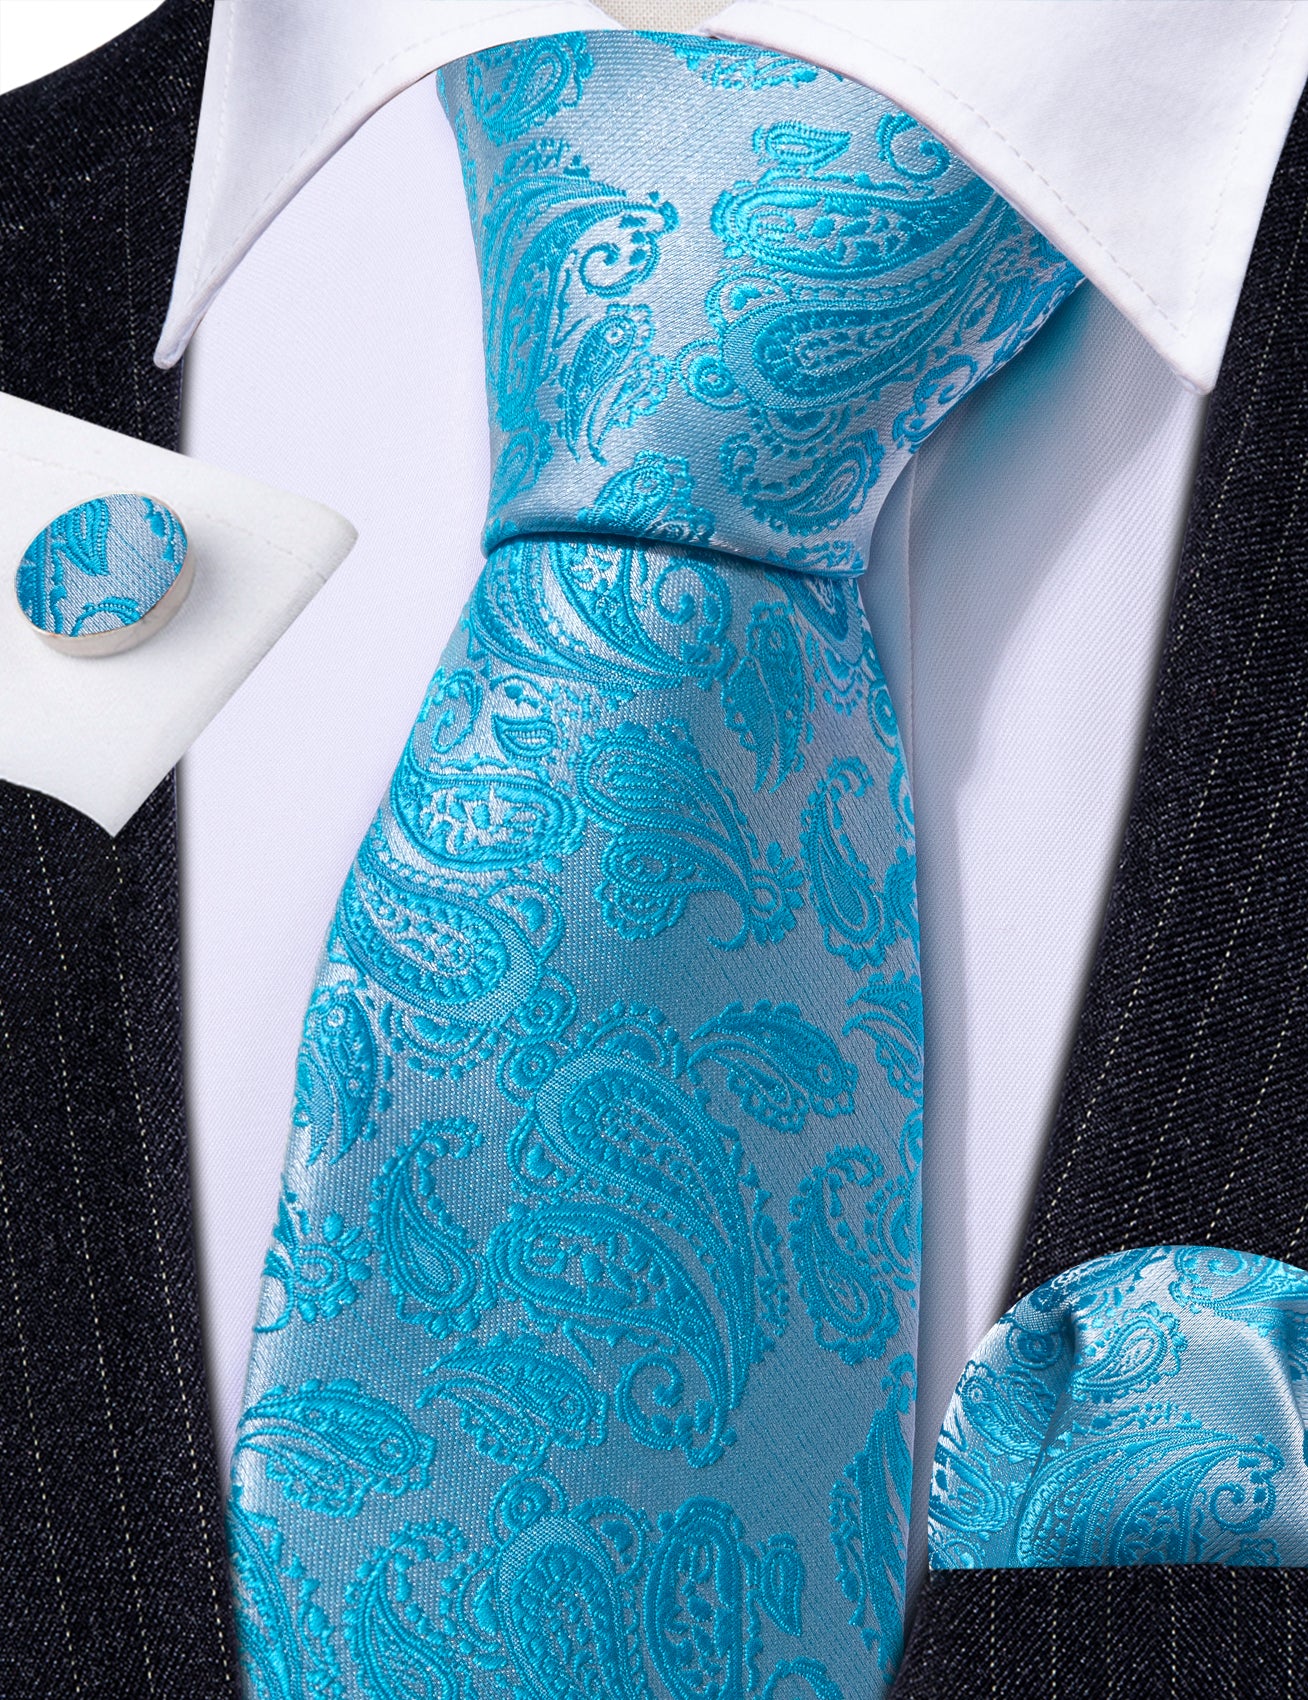 Sky Blue Paisley Silk 63 Inches Extra Long Tie Hanky Cufflinks Set